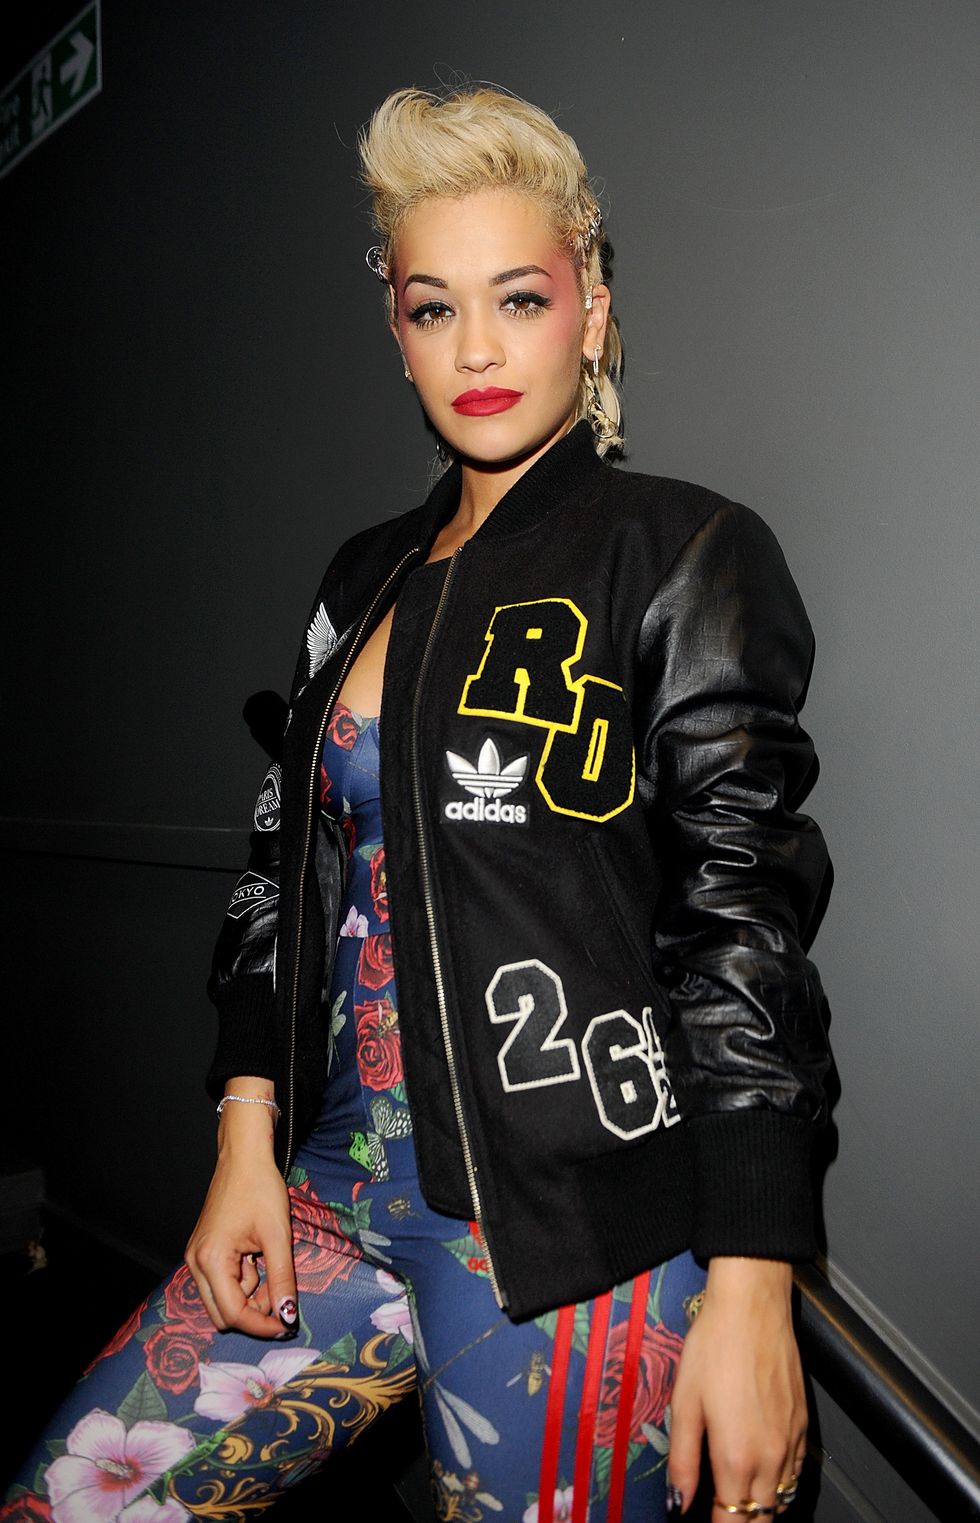 Rita Ora wearing floral Adidas top and leggings and bomber jacket